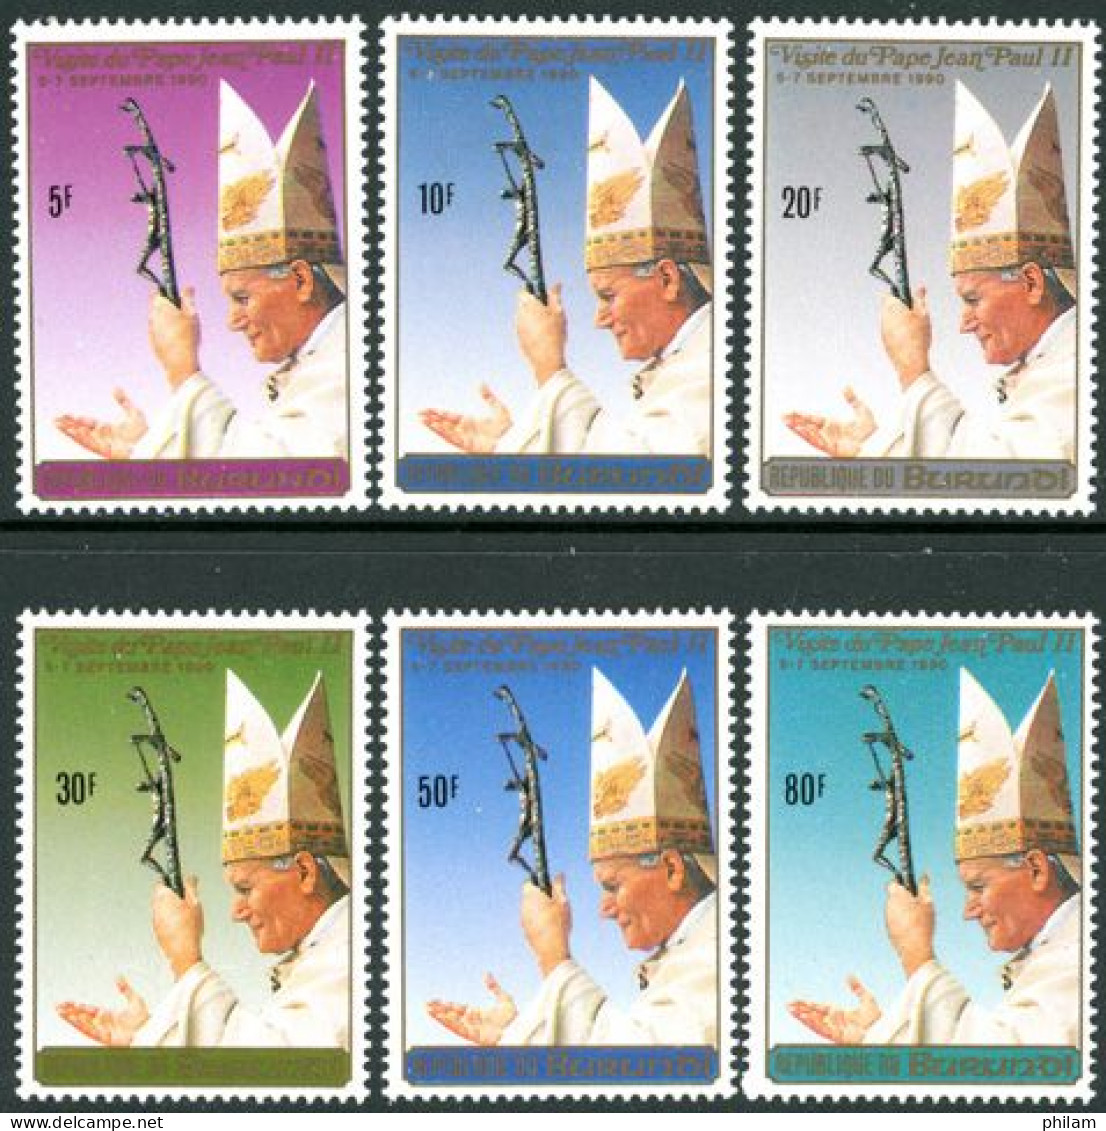 BURUNDI 1990 - Visite Du Pape Jean-Paul II - 6 V. - Popes